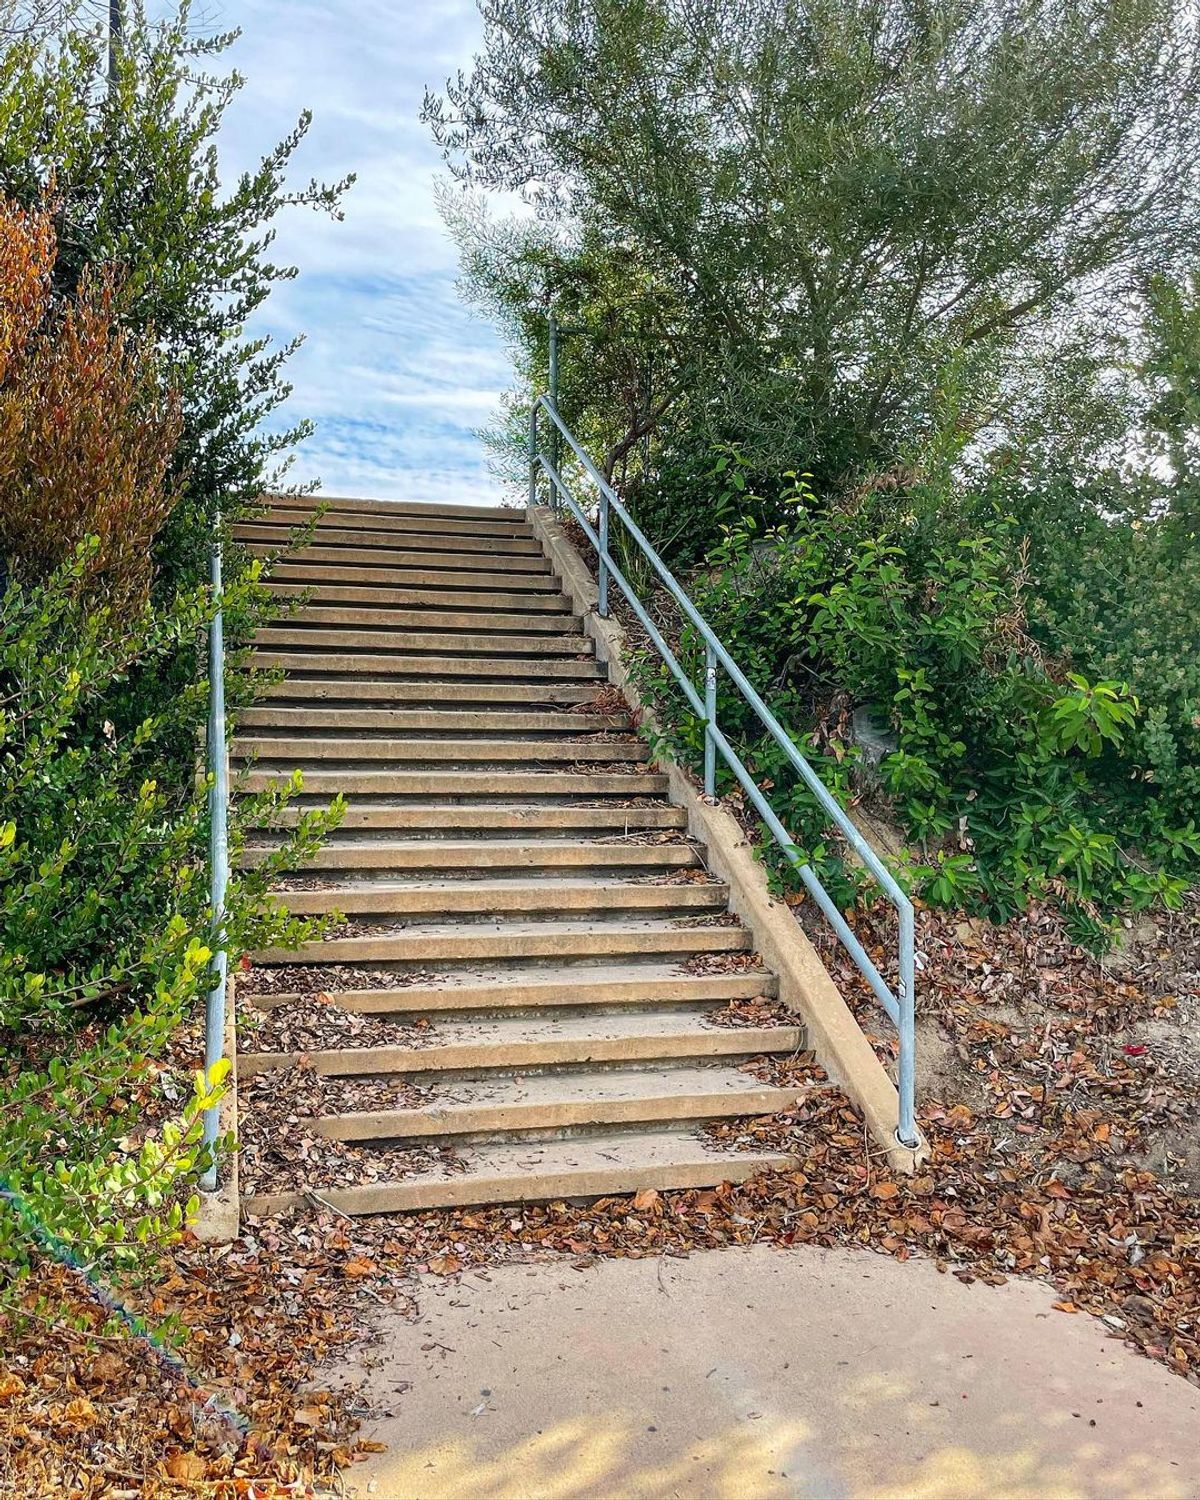 Image for skate spot Torrey Pines High School 21 Stair Rail